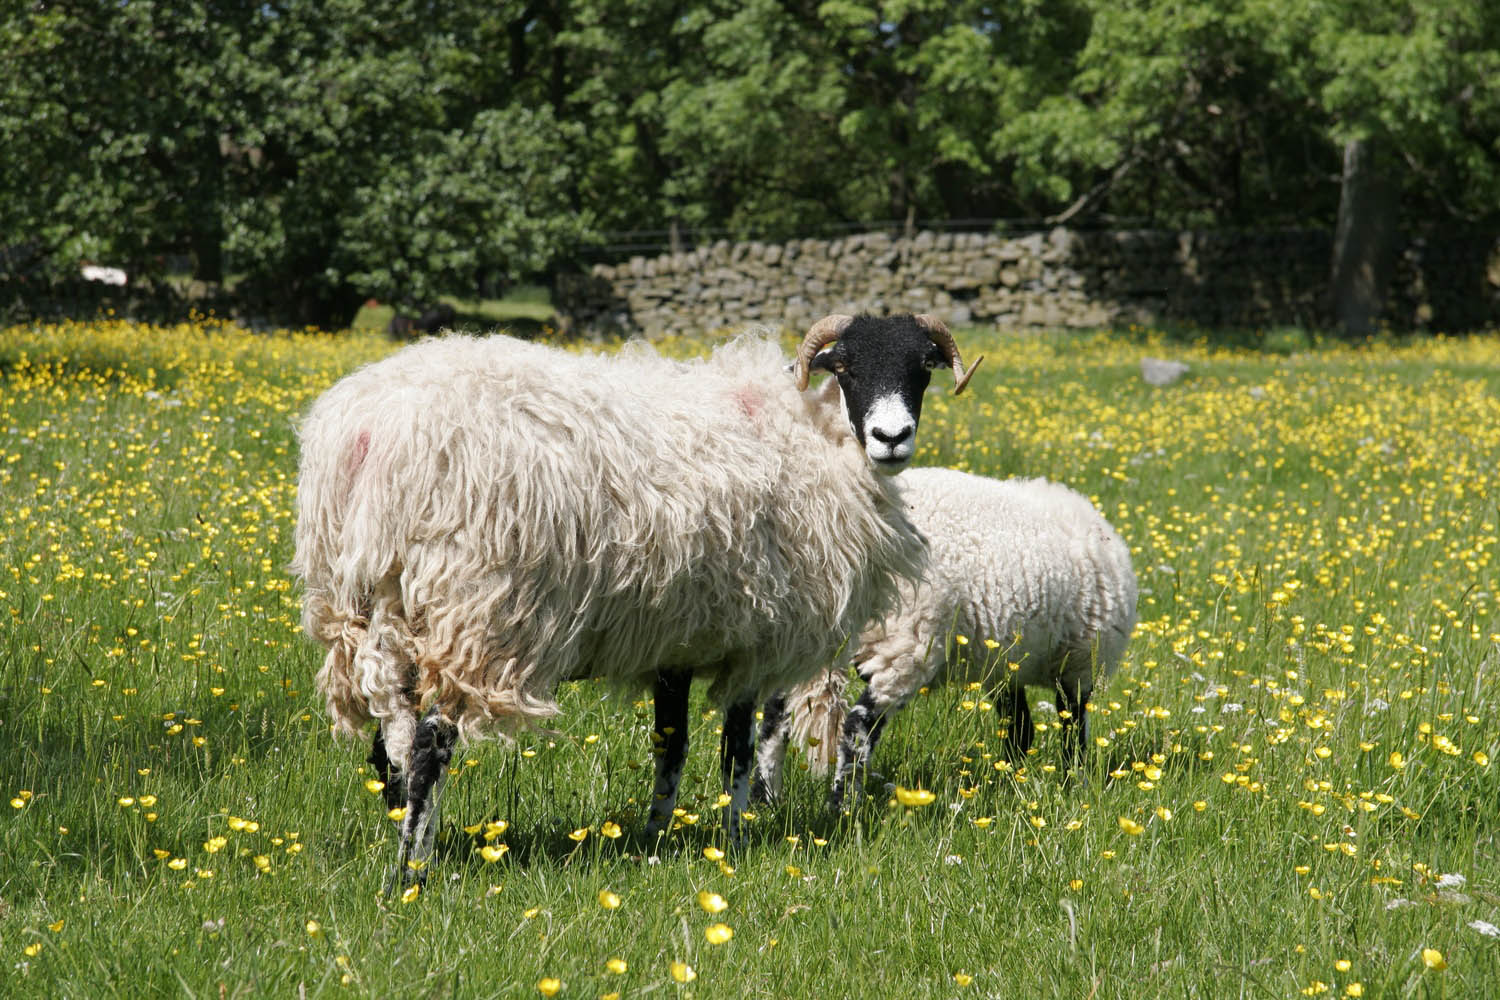 Photo sheep in a field